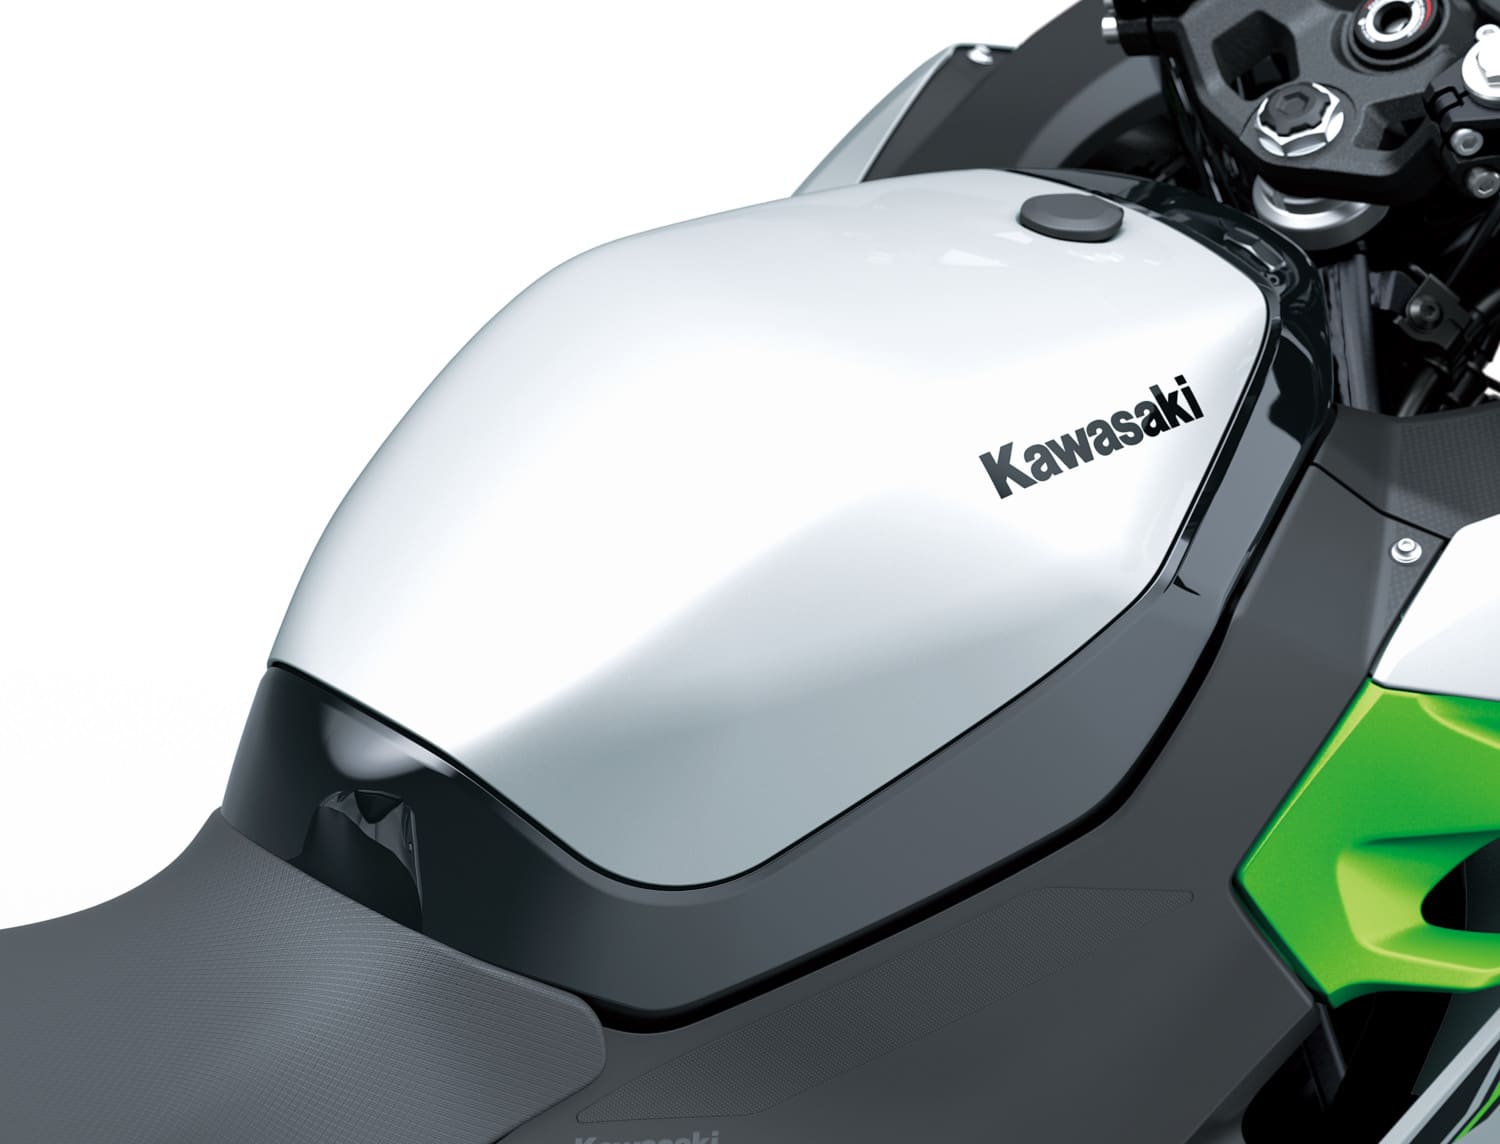 Alt du skal vide om de to elektriske Kawasaki modeller